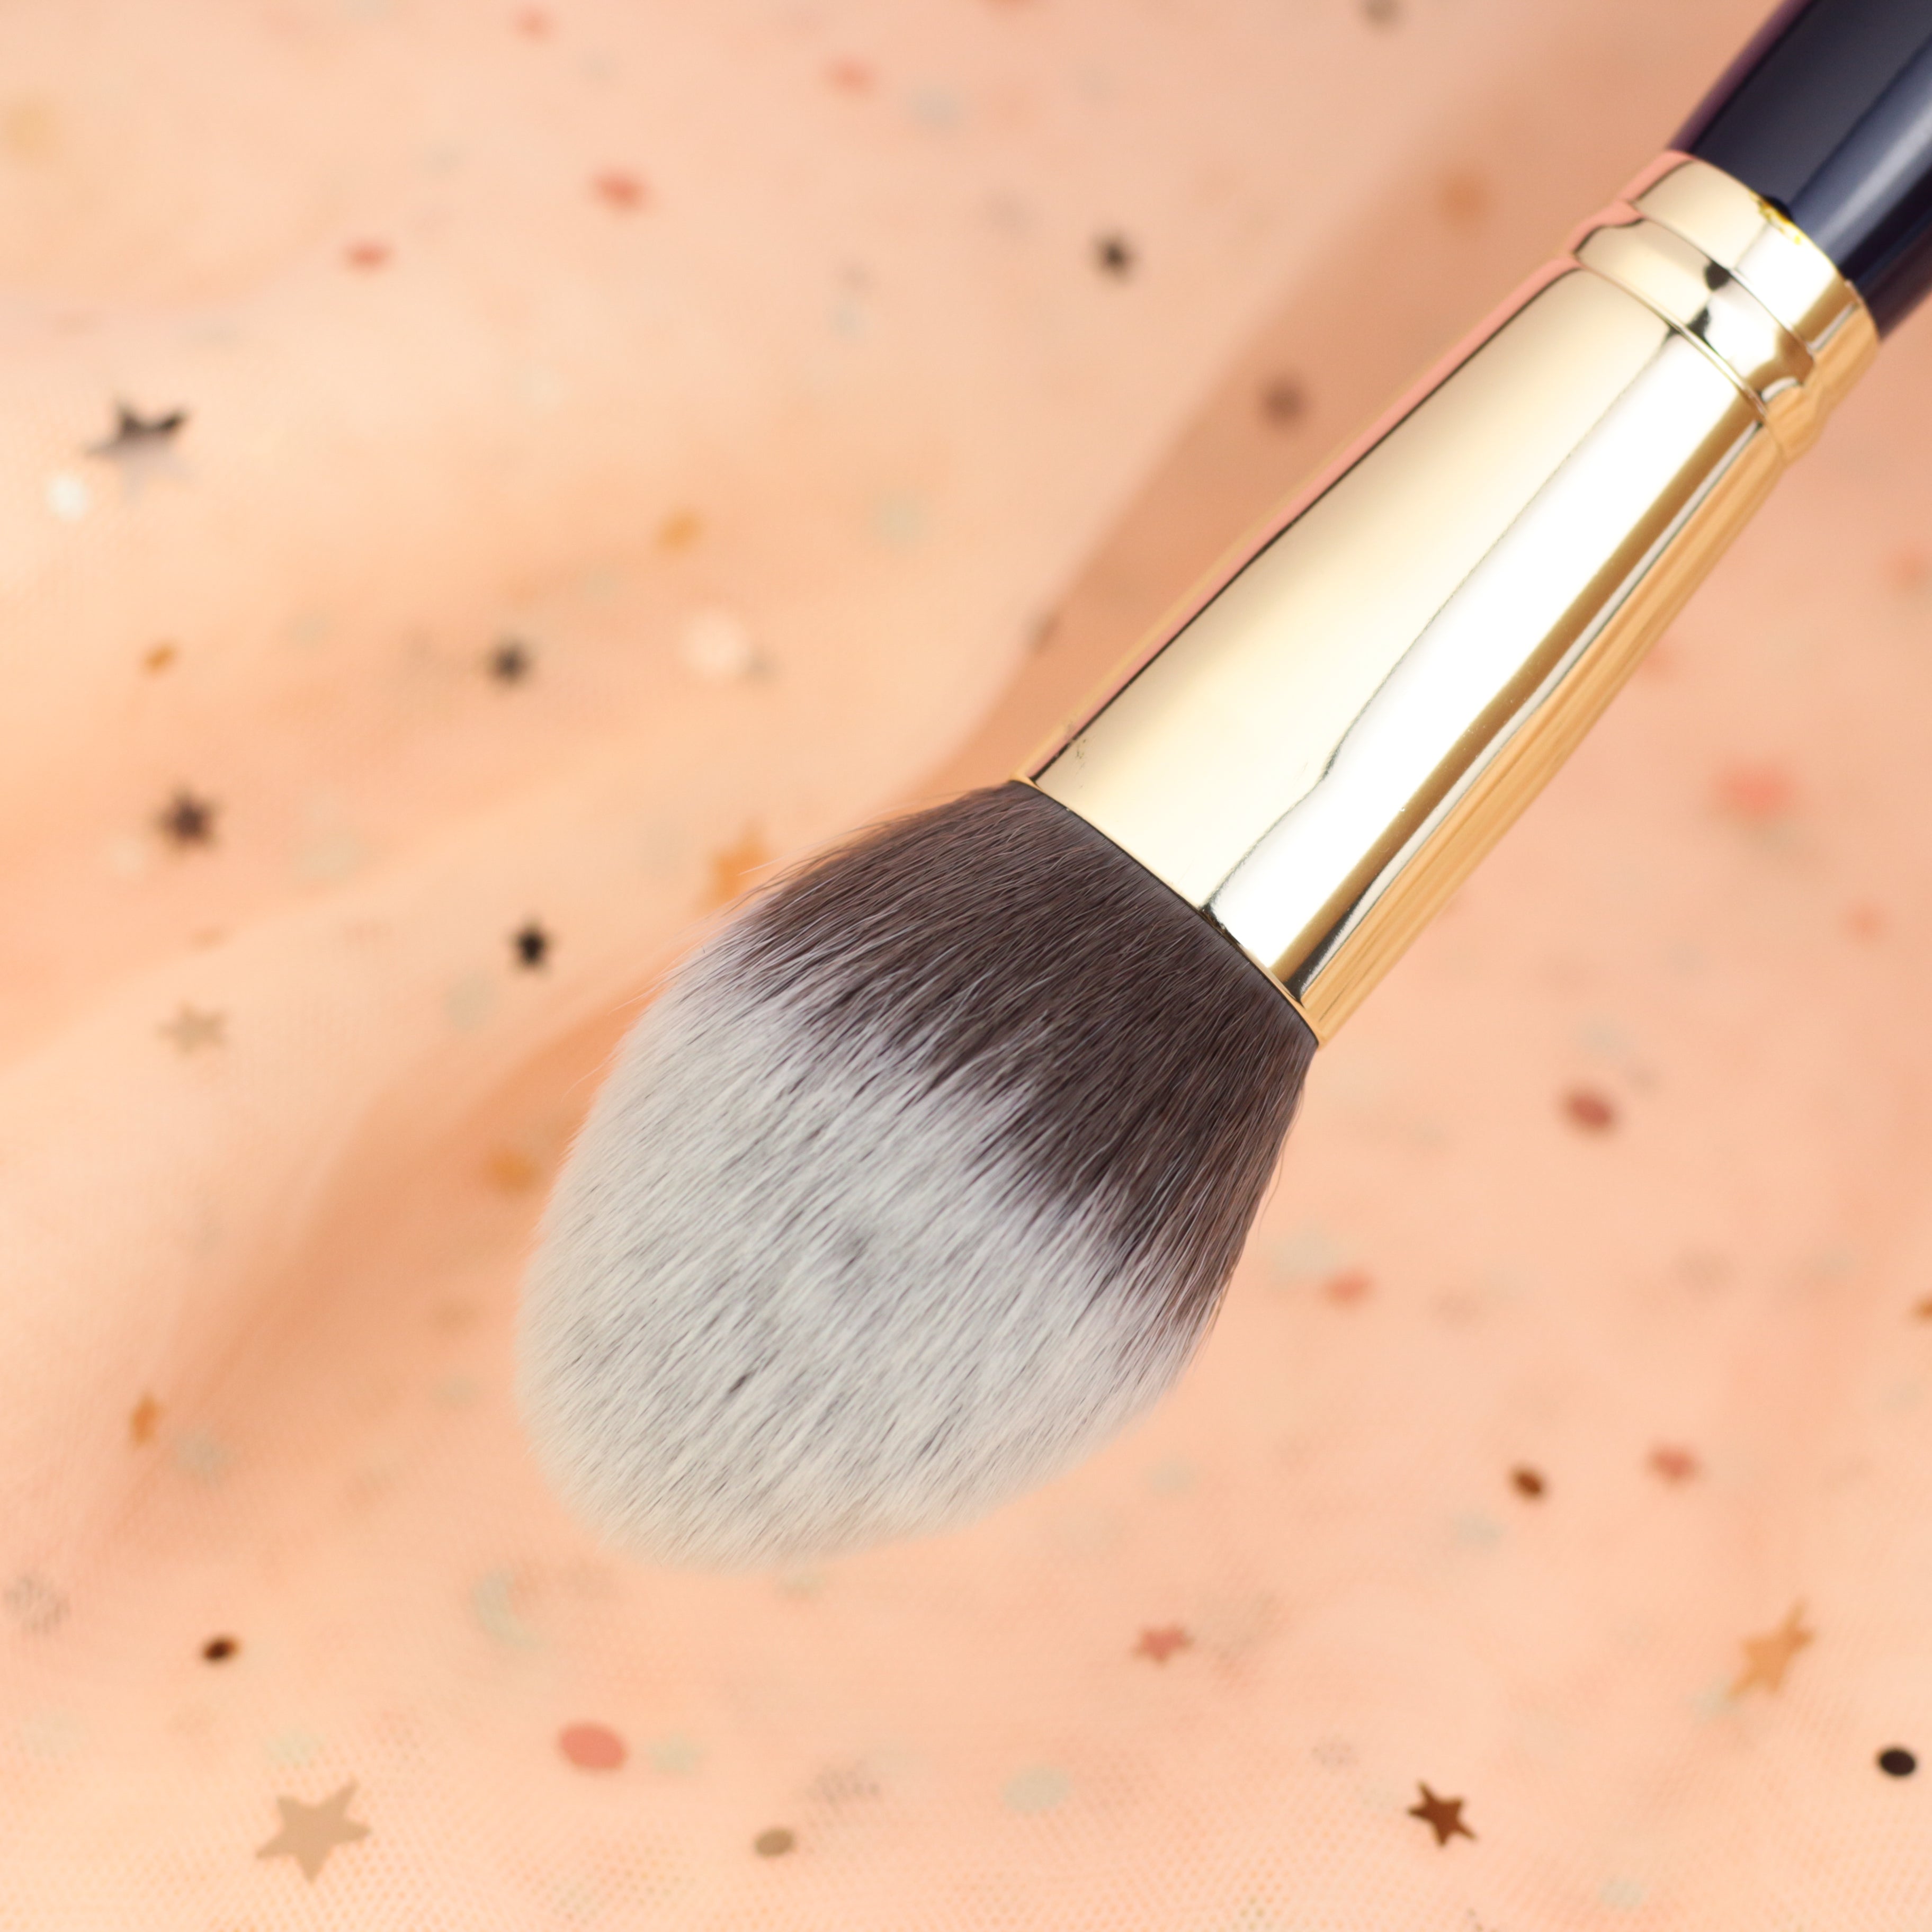 Pro Powder v2 - 13rushes - Singapore's best makeup brushes